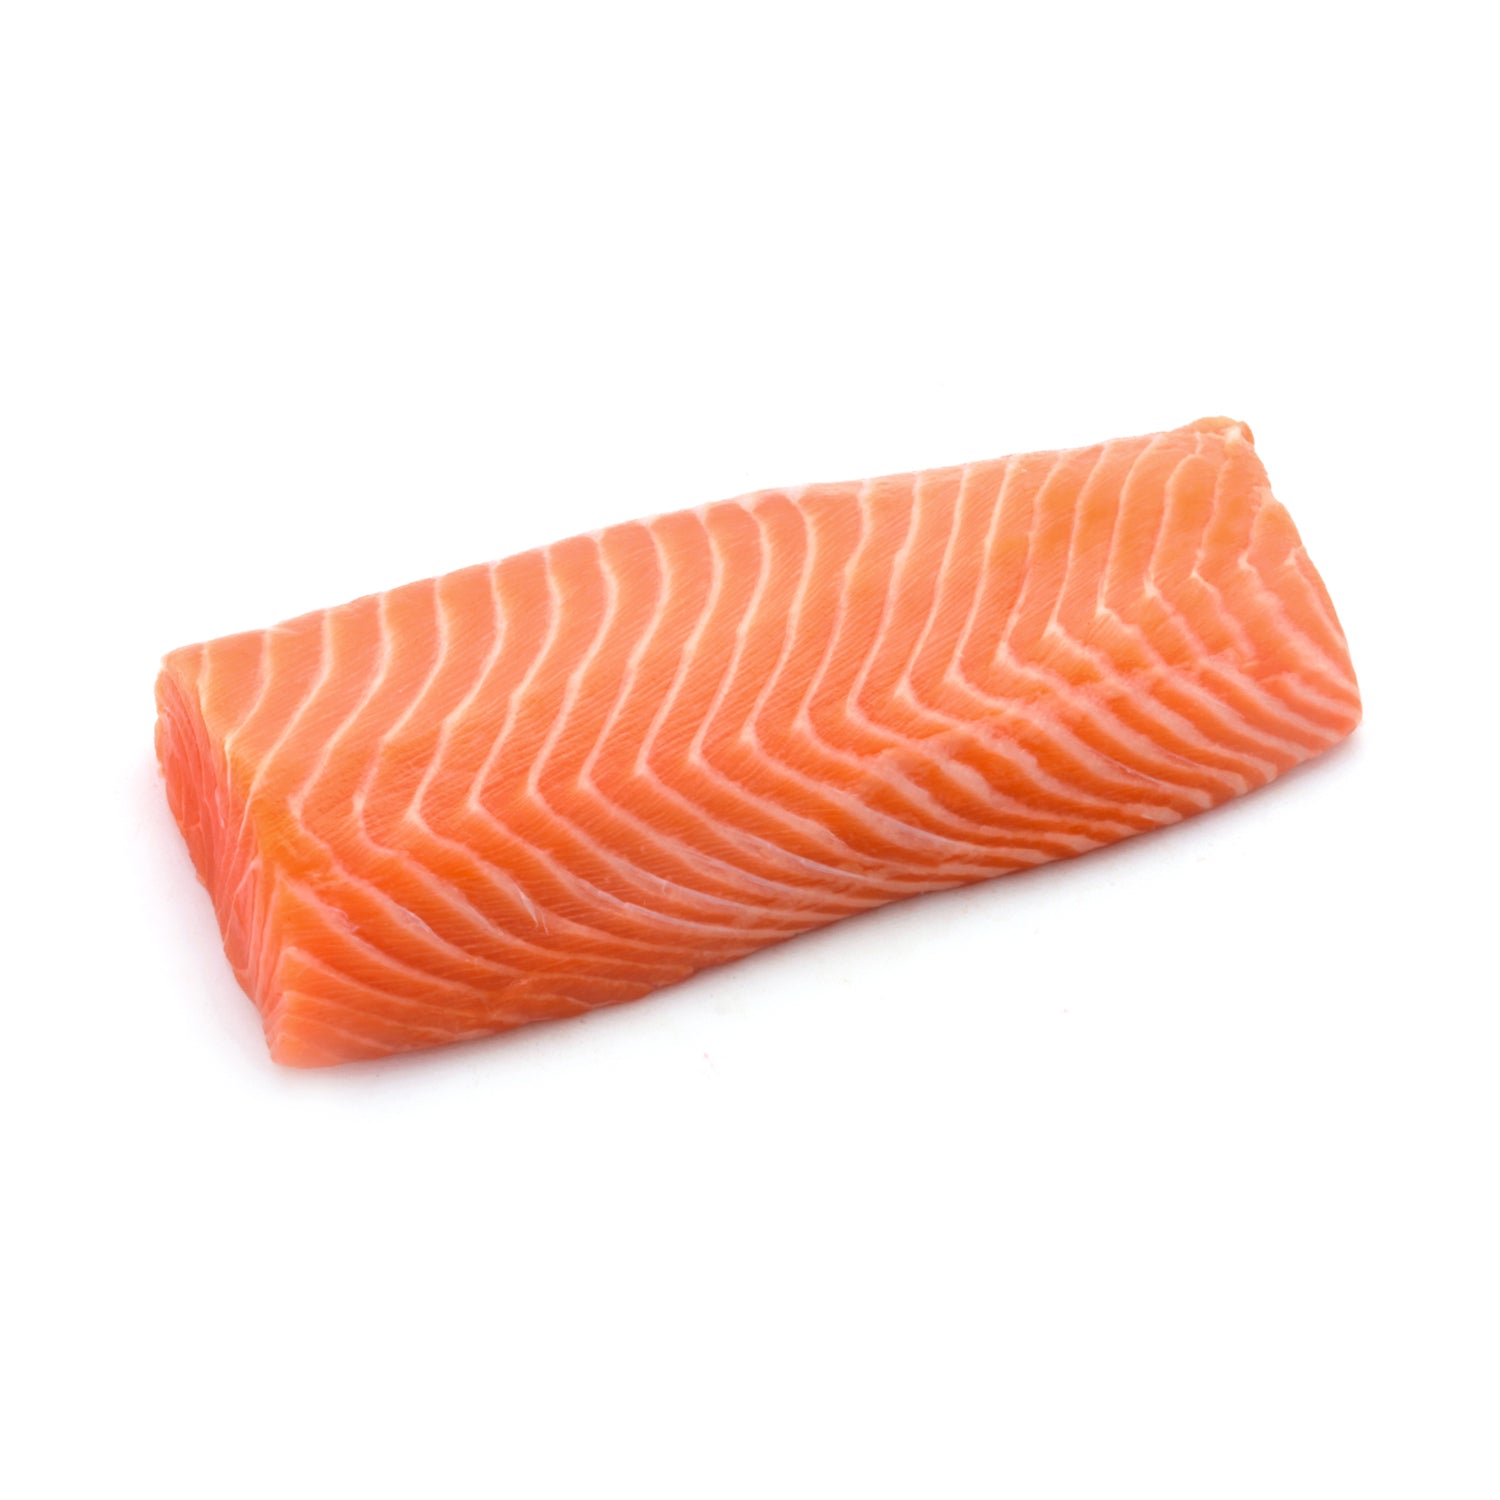 Salmon Balik - سالمون باليك